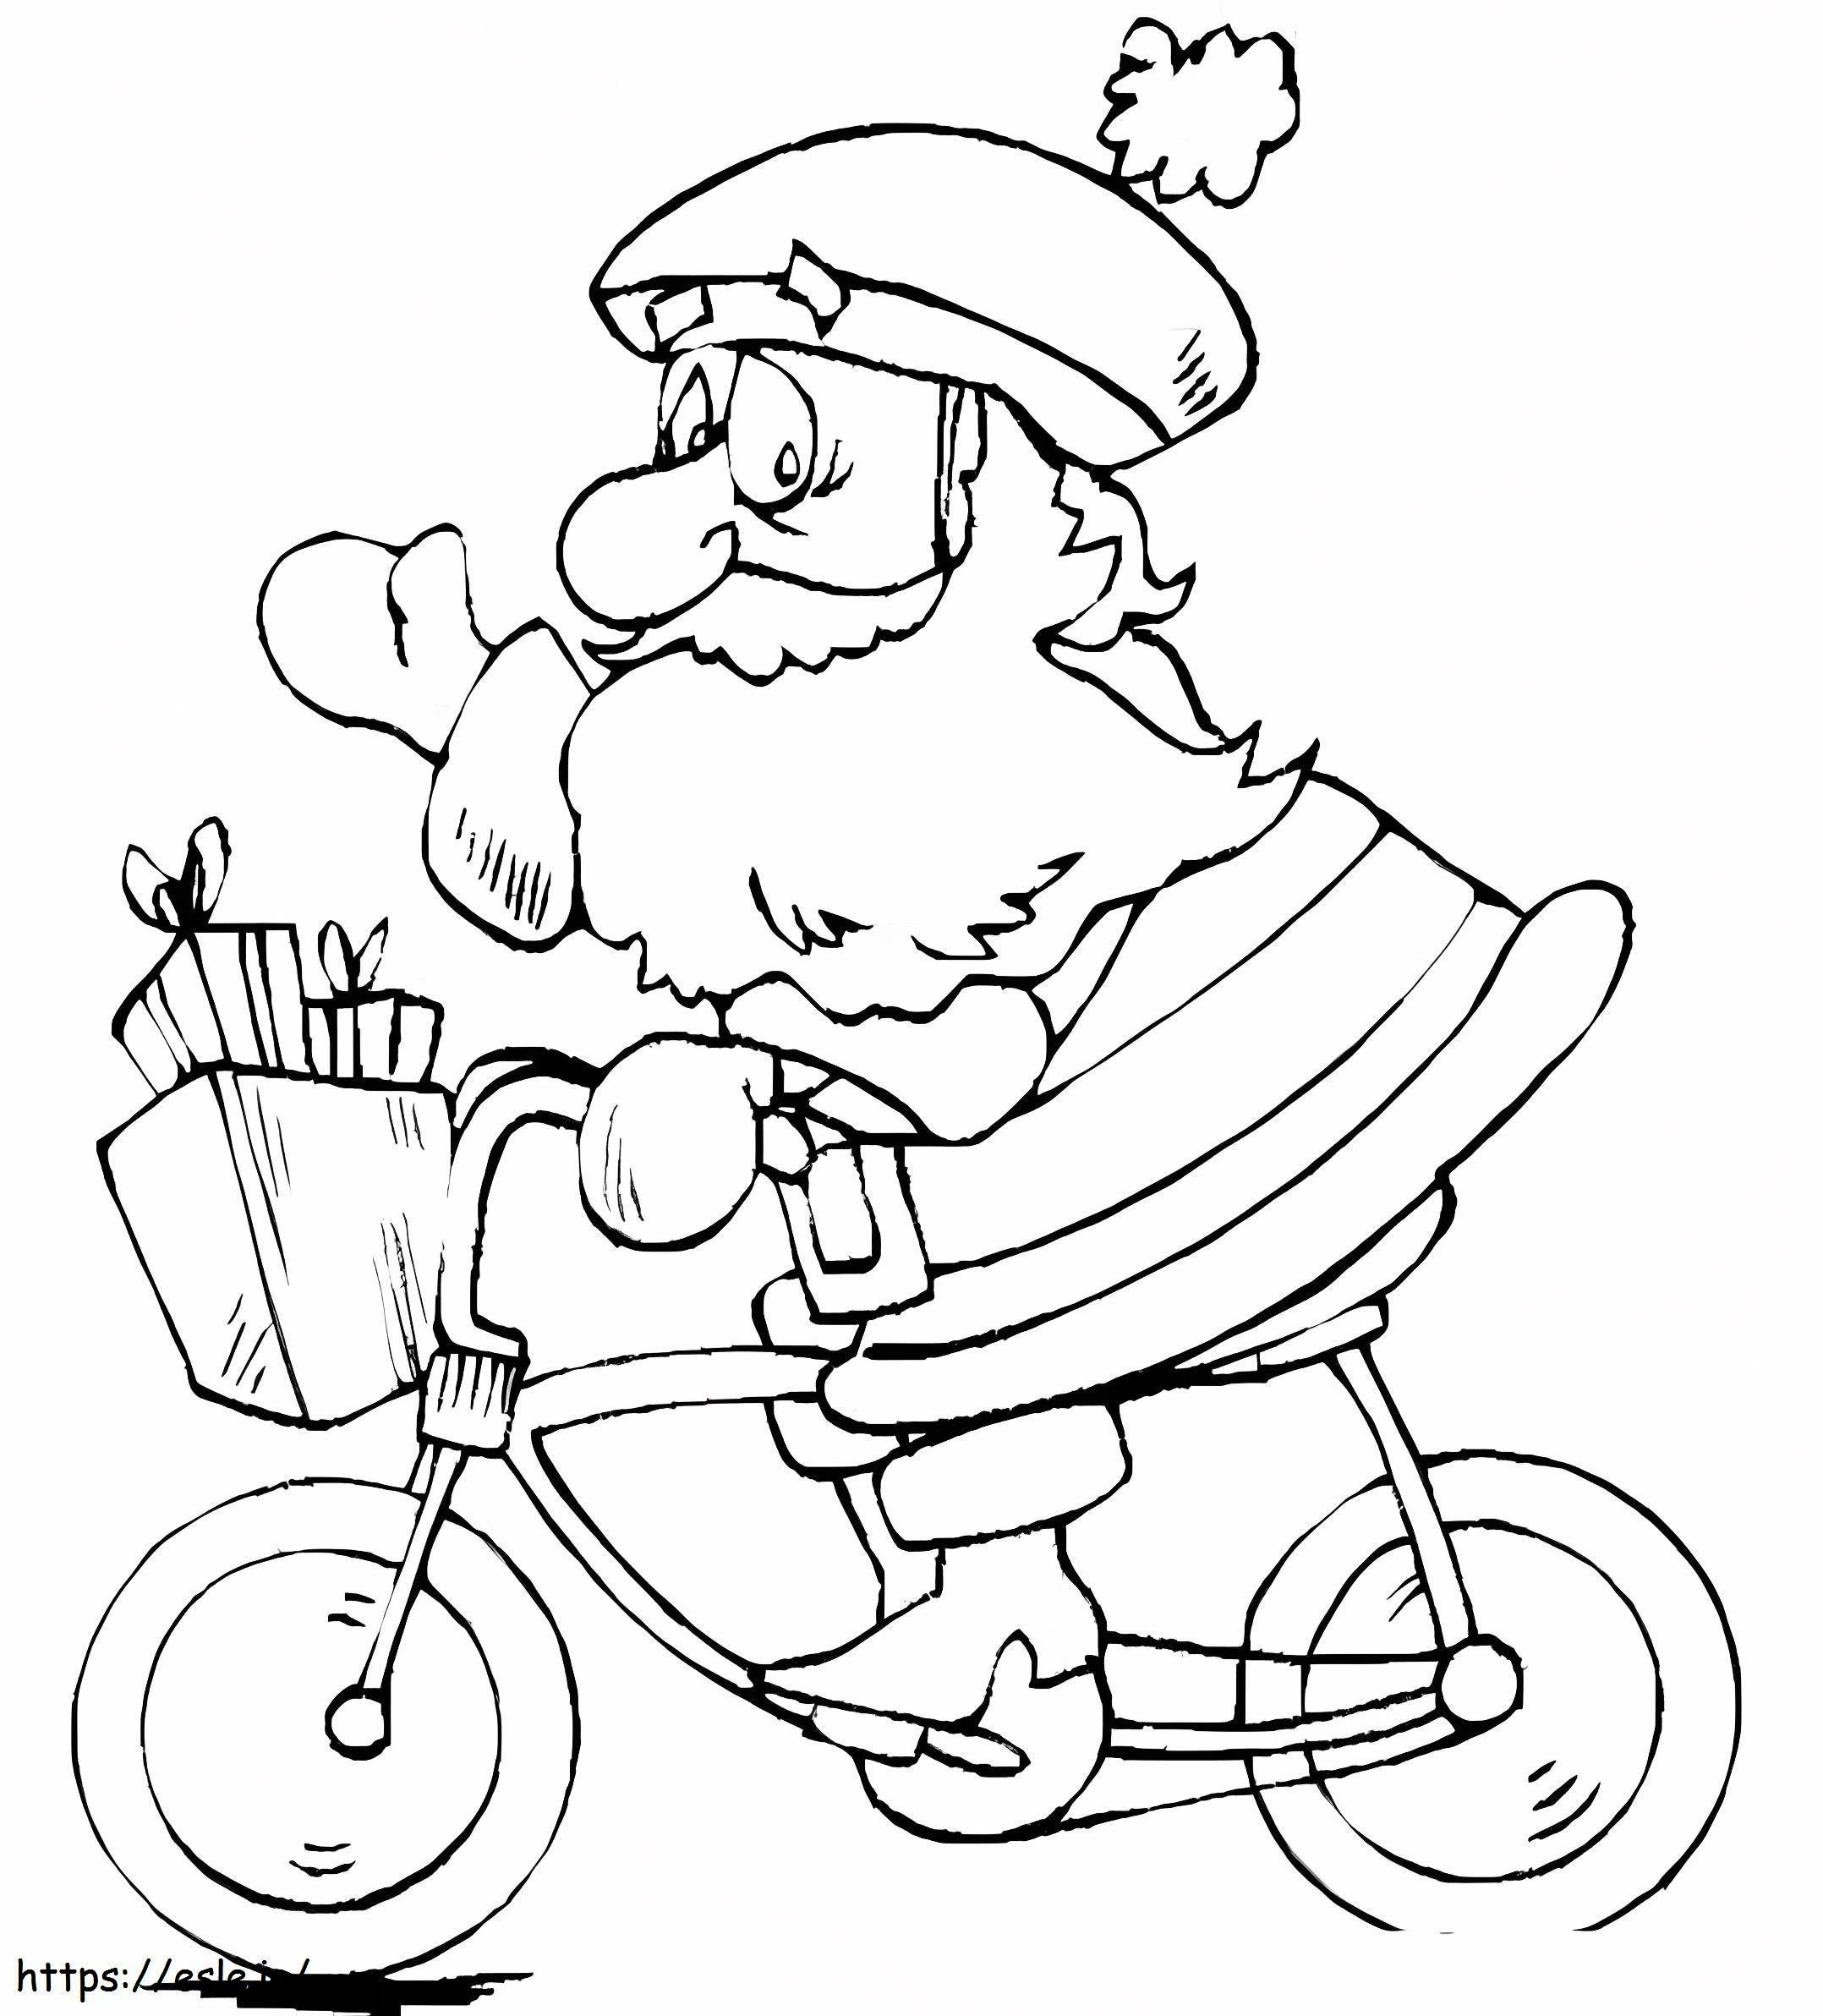 Papai Noel anda de bicicleta para colorir